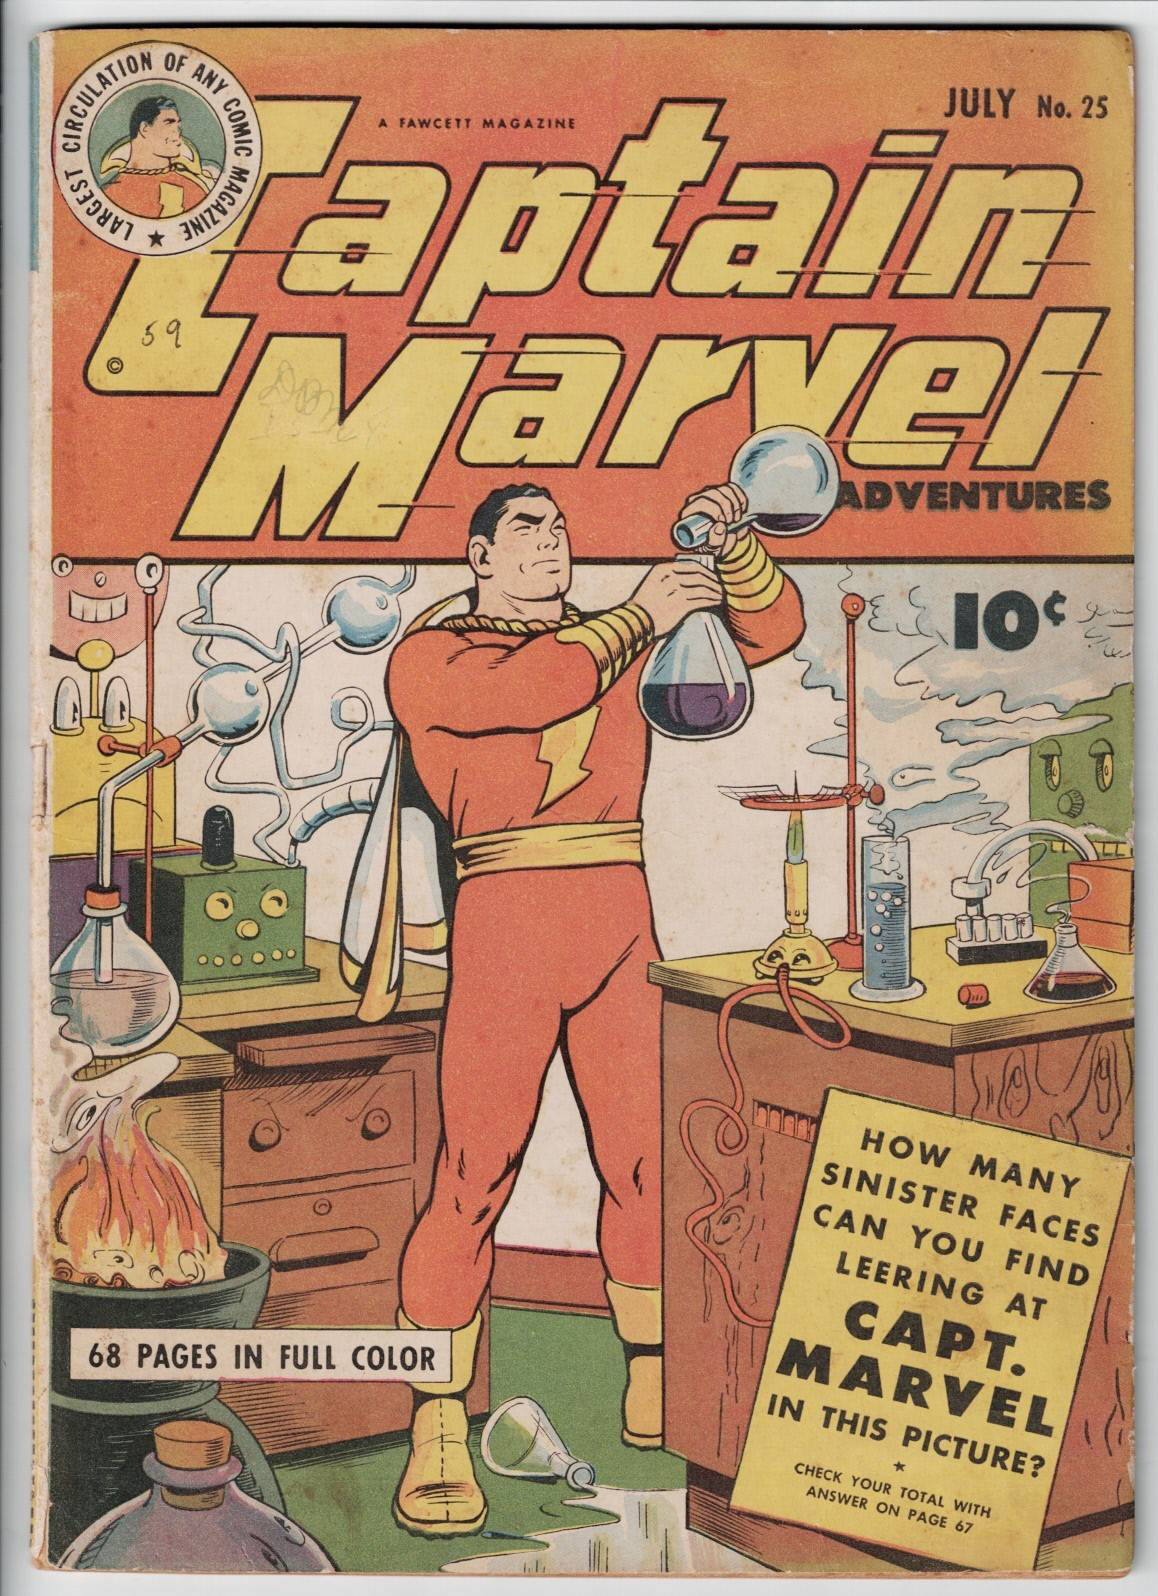 Captain Marvel Adventures #25 front